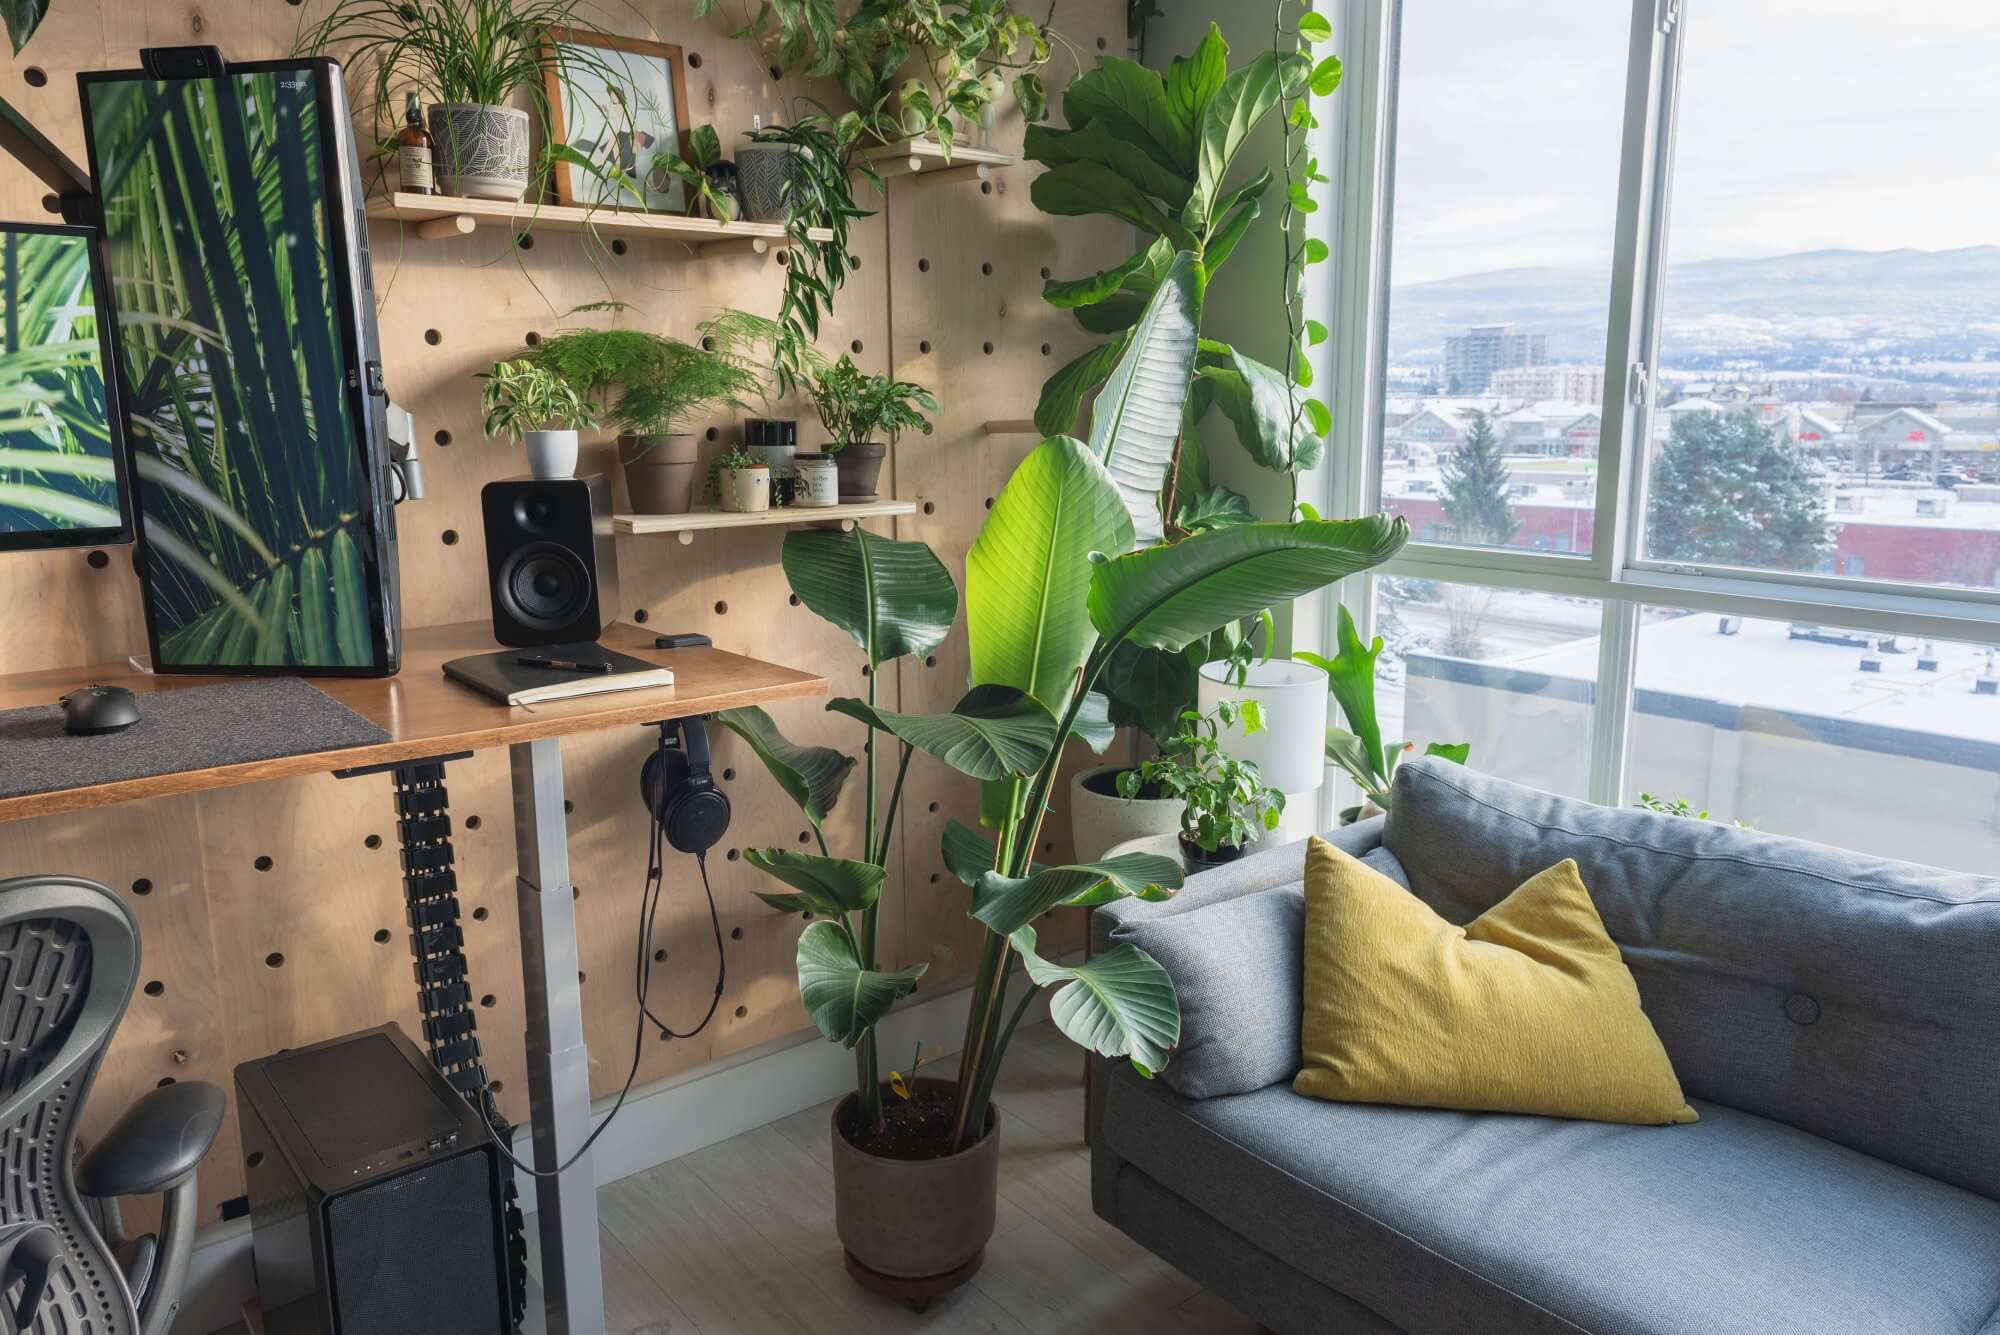 A living room full of plants